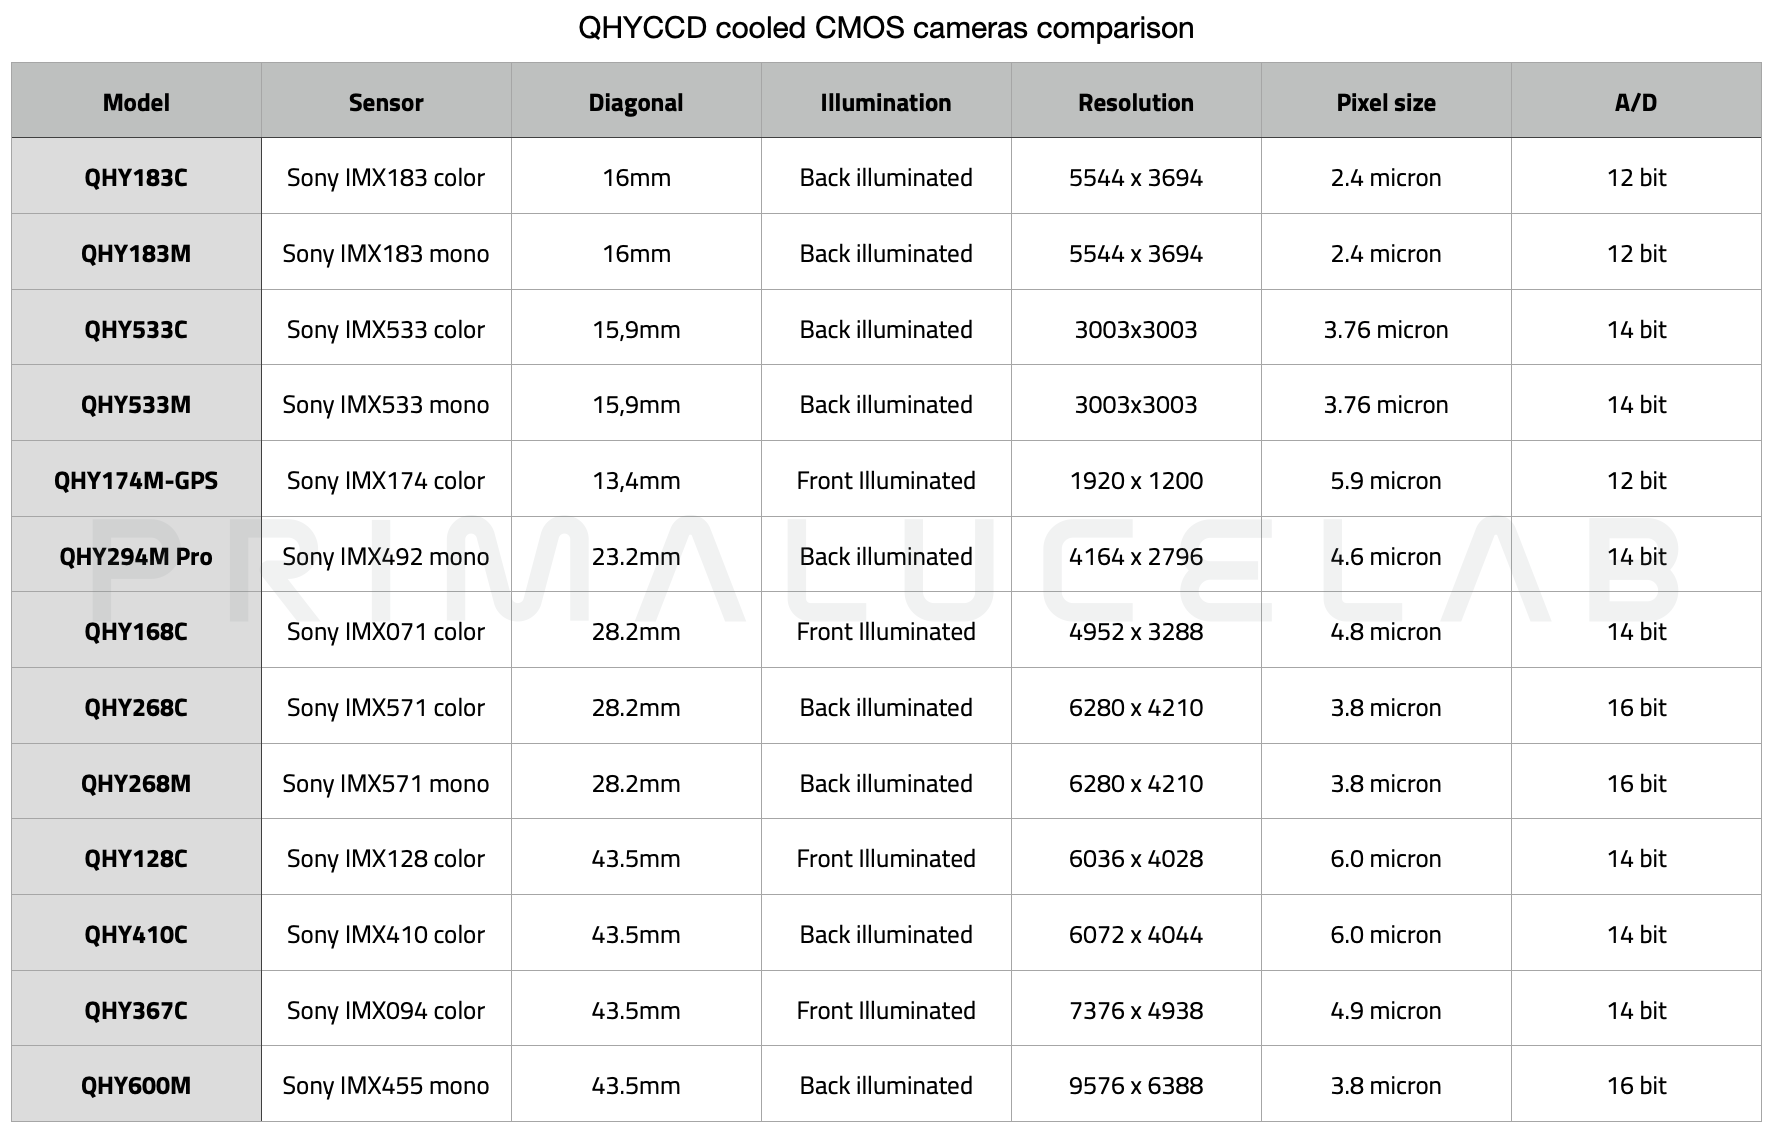 QHYCCD cooled CMOS cameras comparison